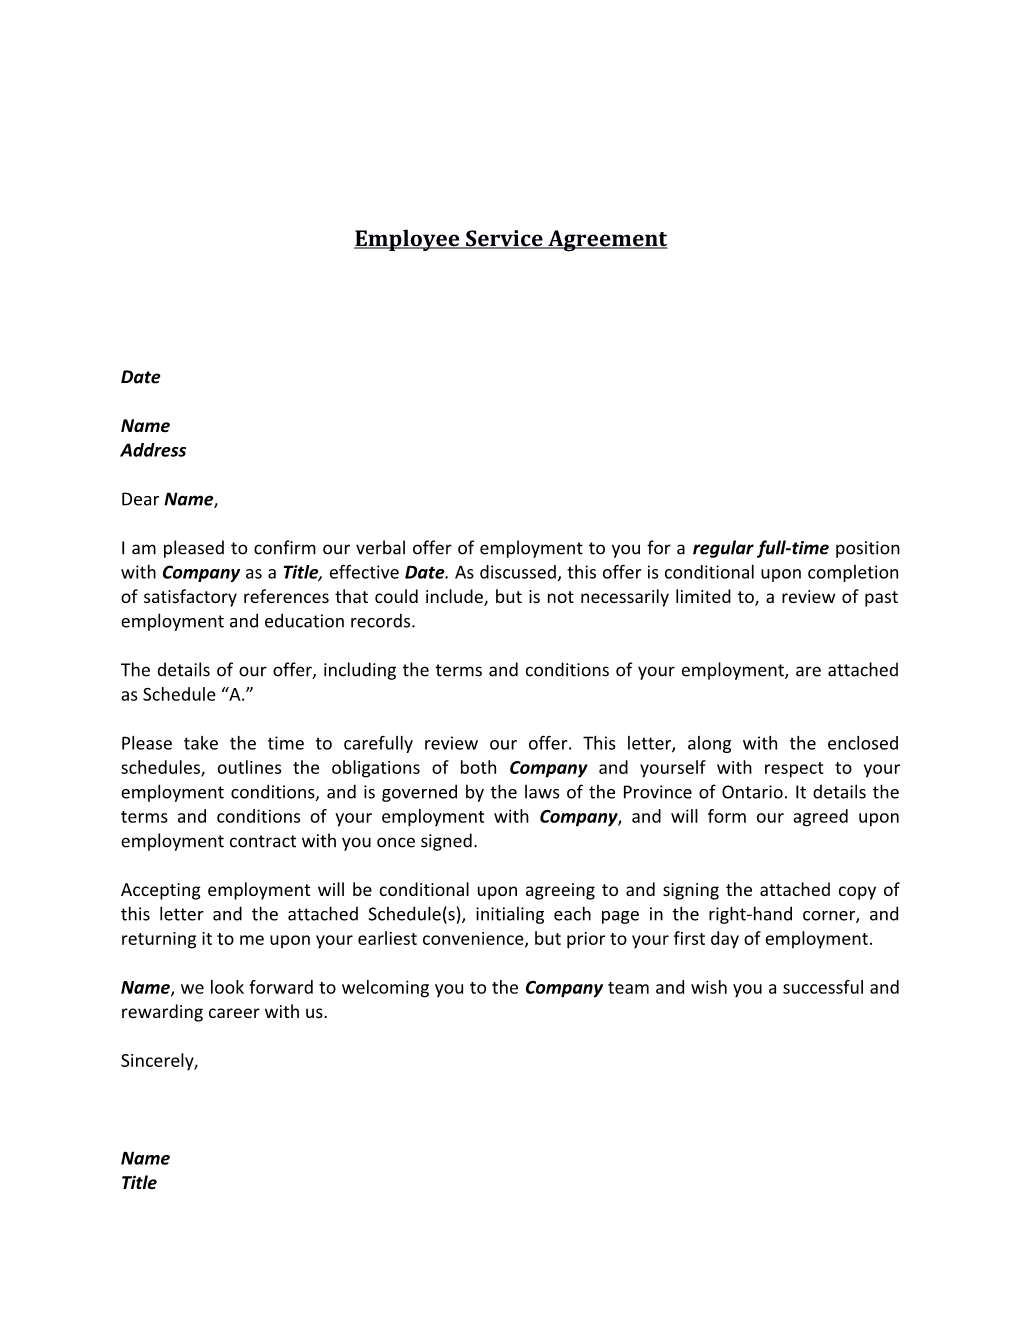 Employee Service Agreement